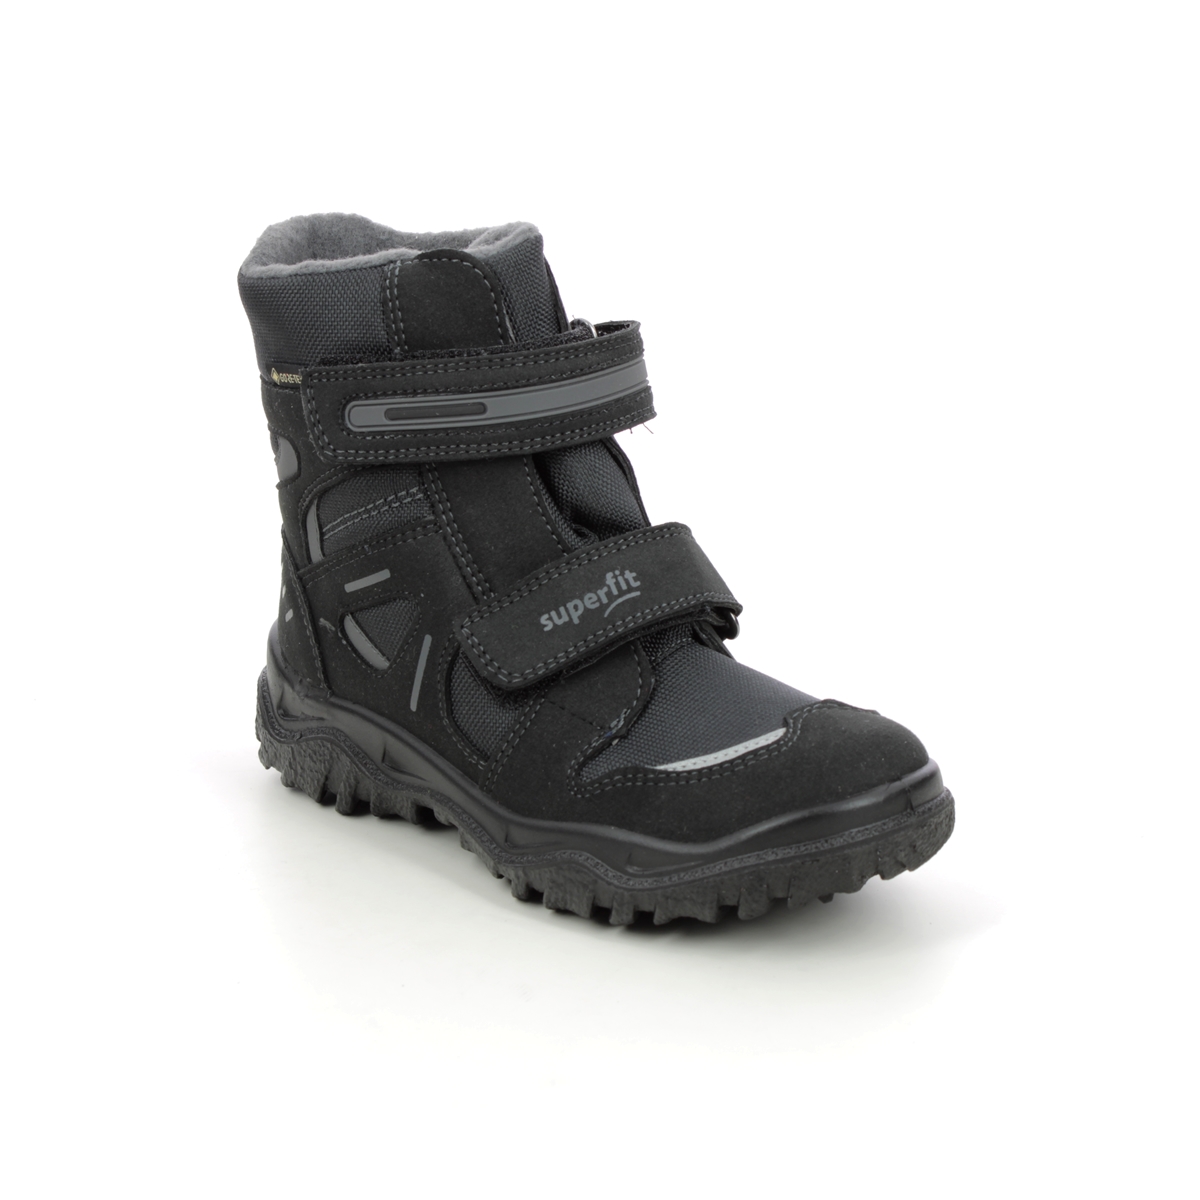 Superfit Husky Jnr Gore Black Kids Boys Boots 0809080-0600 In Size 30 In Plain Black For kids